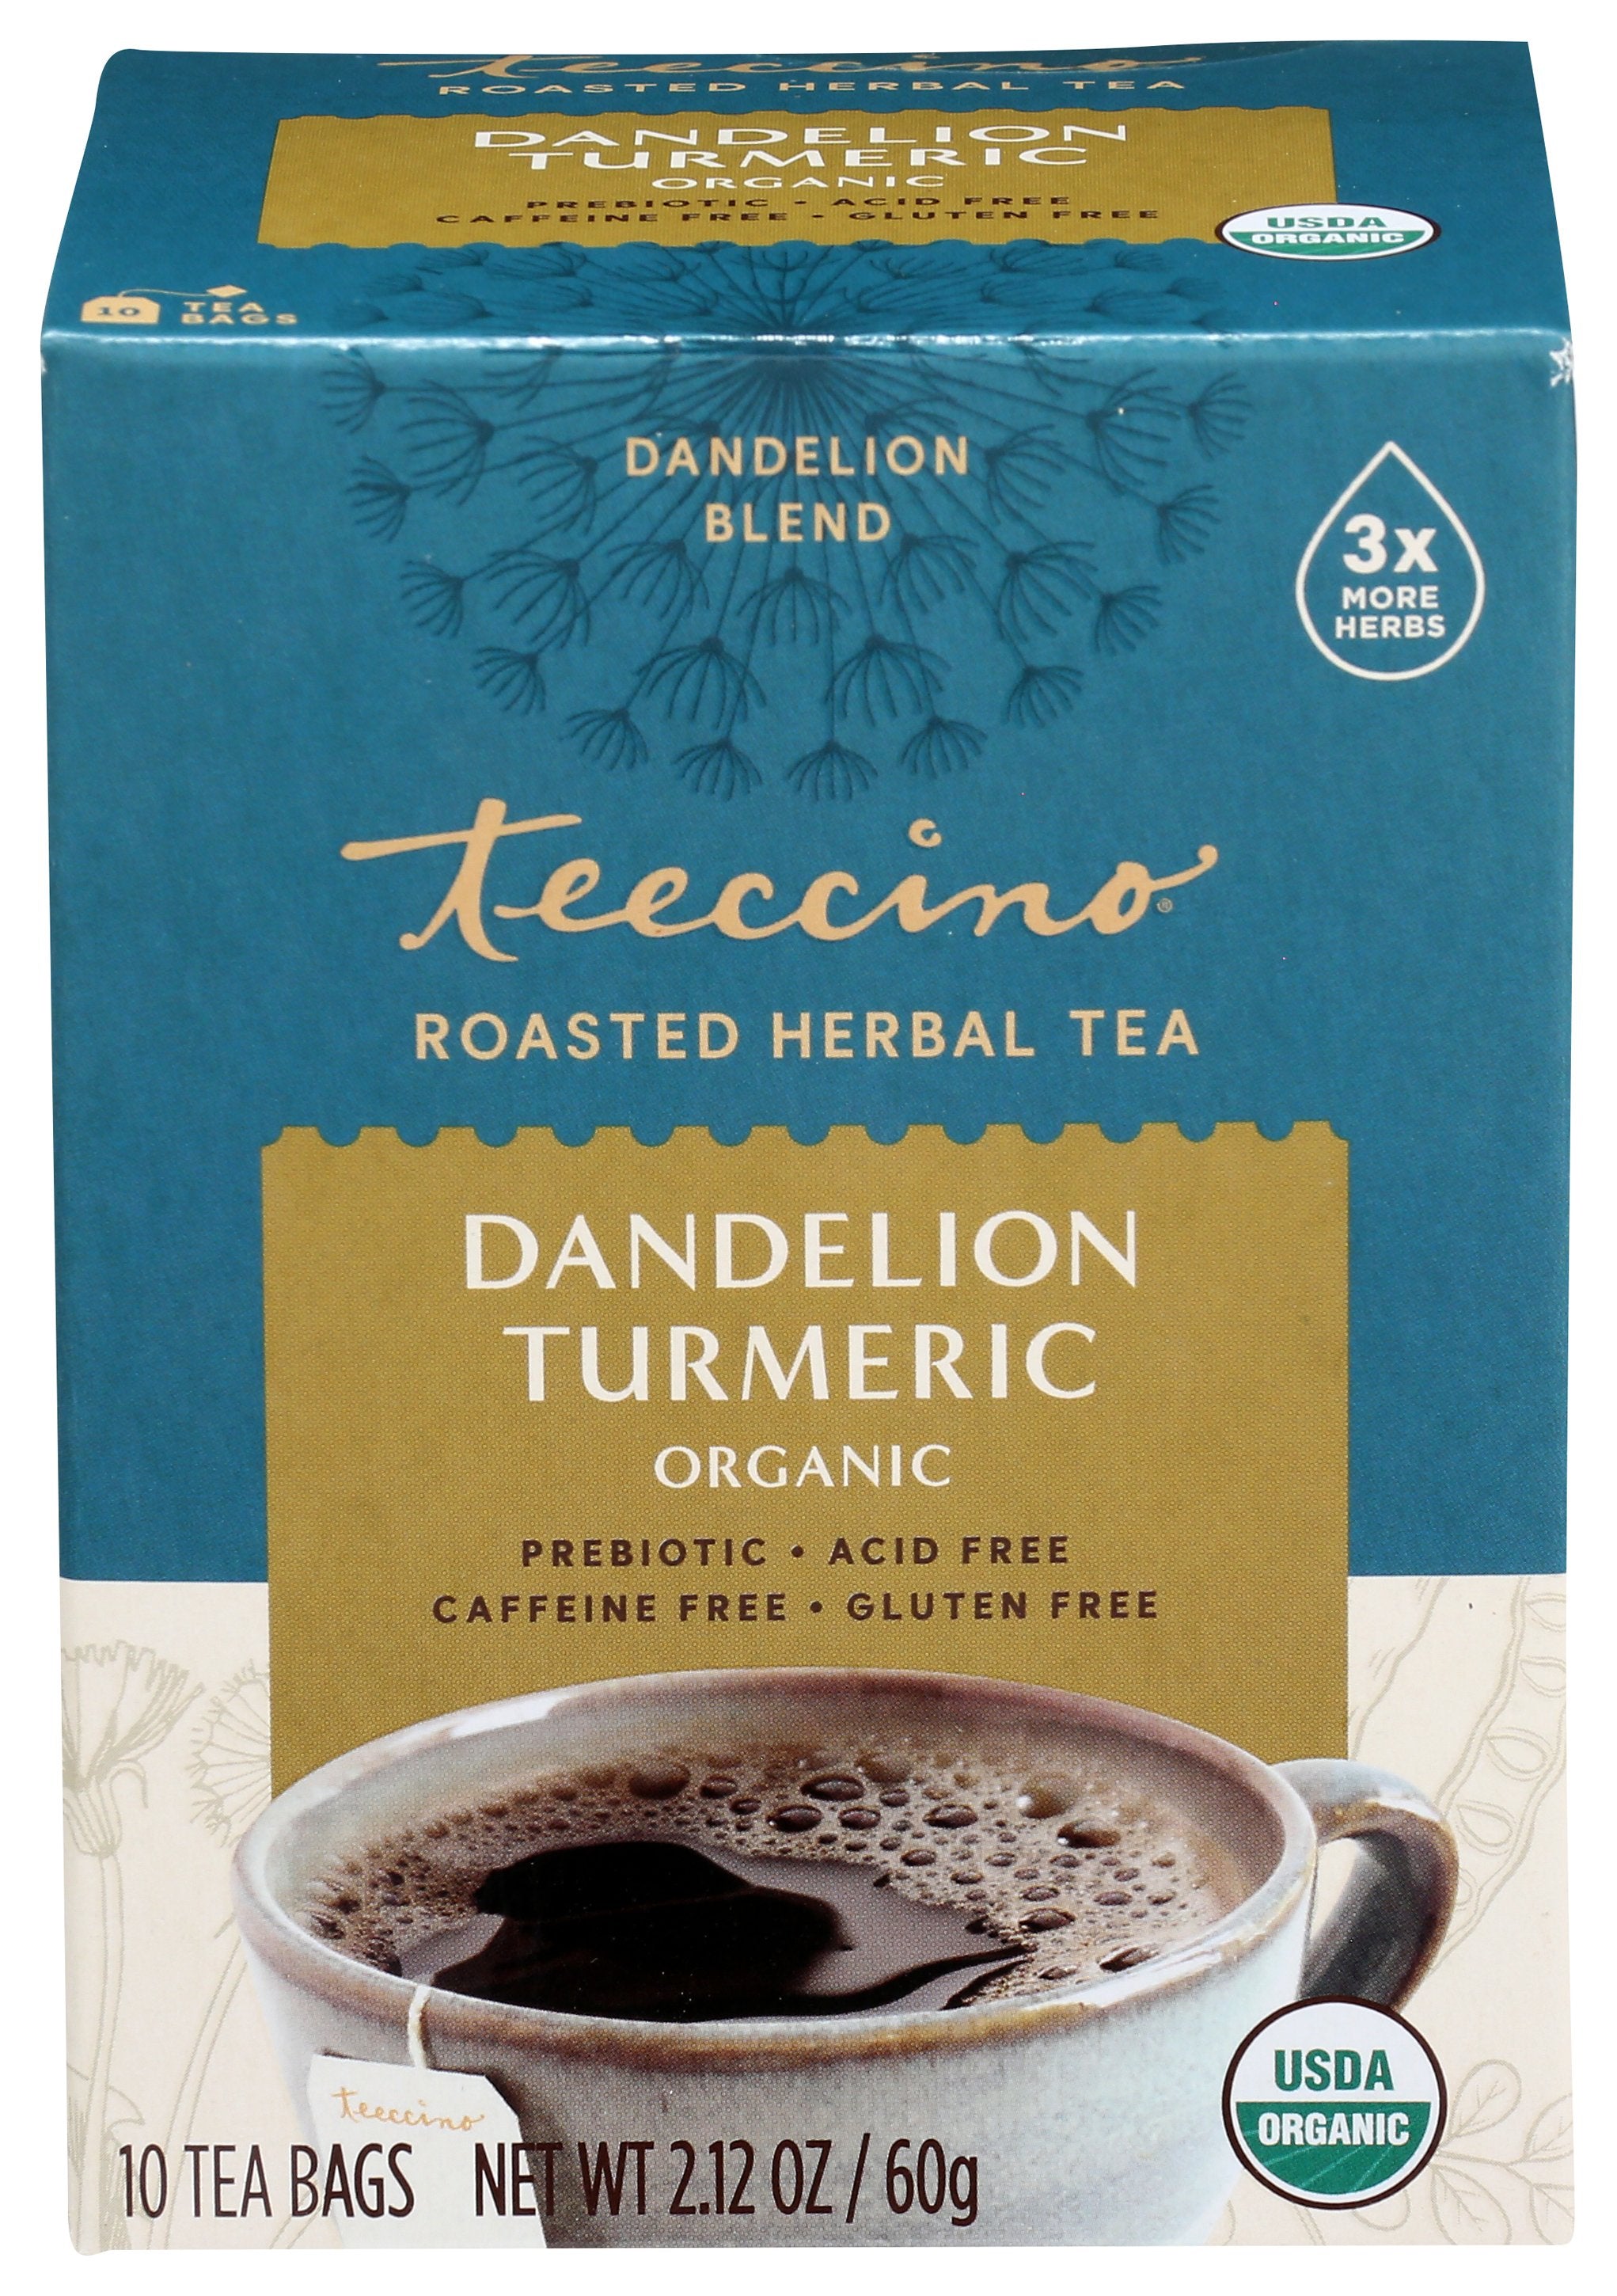 TEECCINO TEA DANDELION TURMERIC - Case of 6